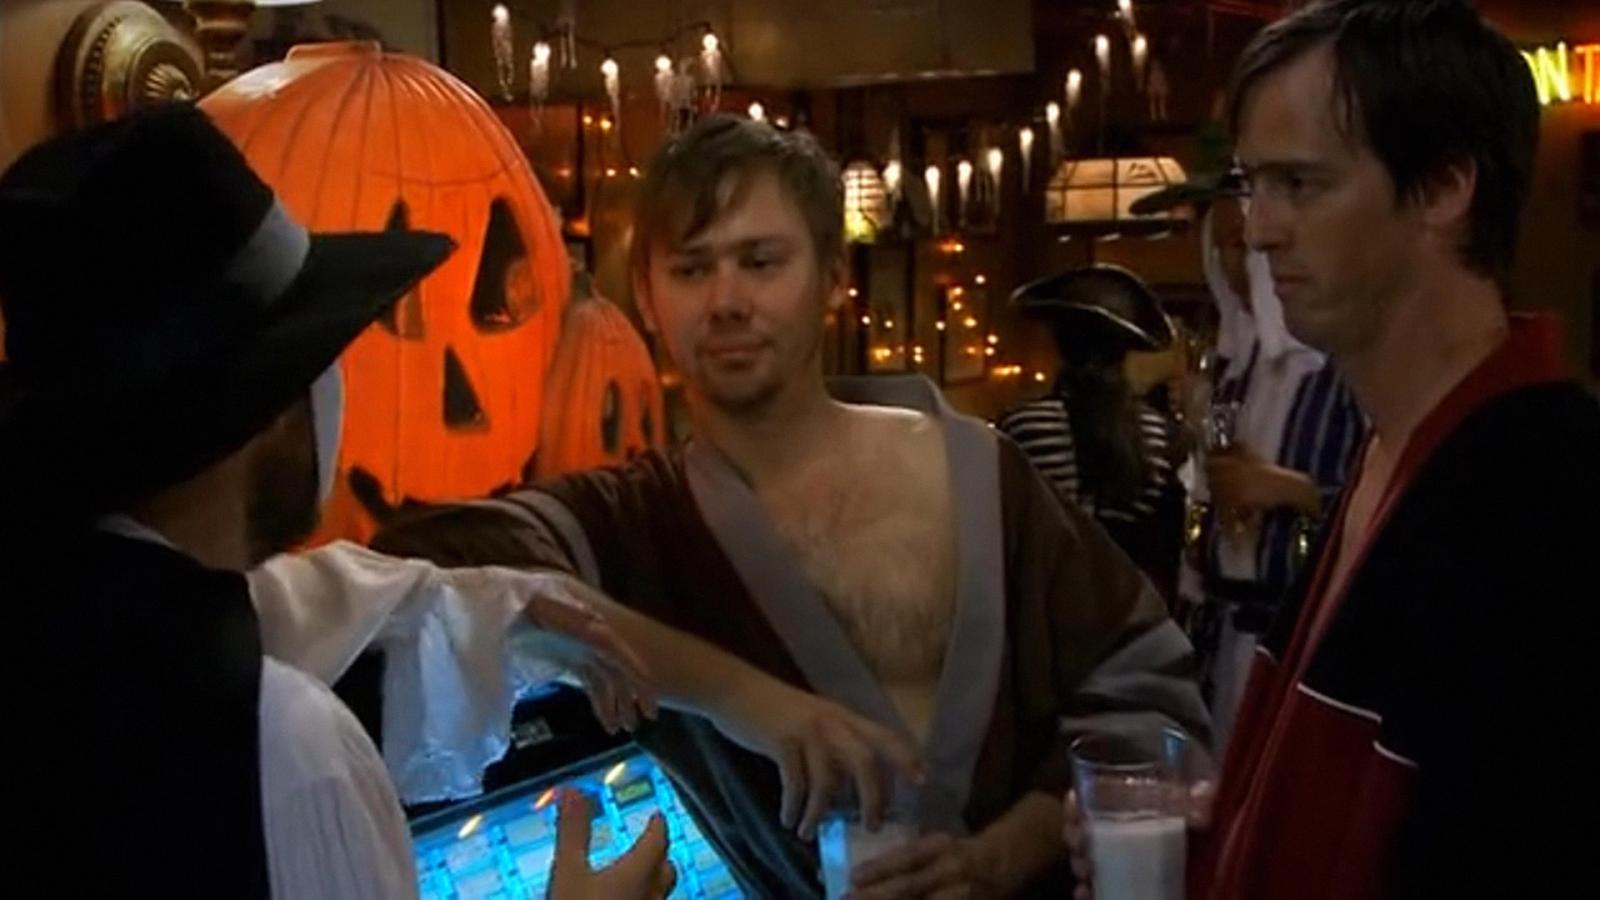 Reddit's List of 10 Greatest Halloween TV Episodes - image 10